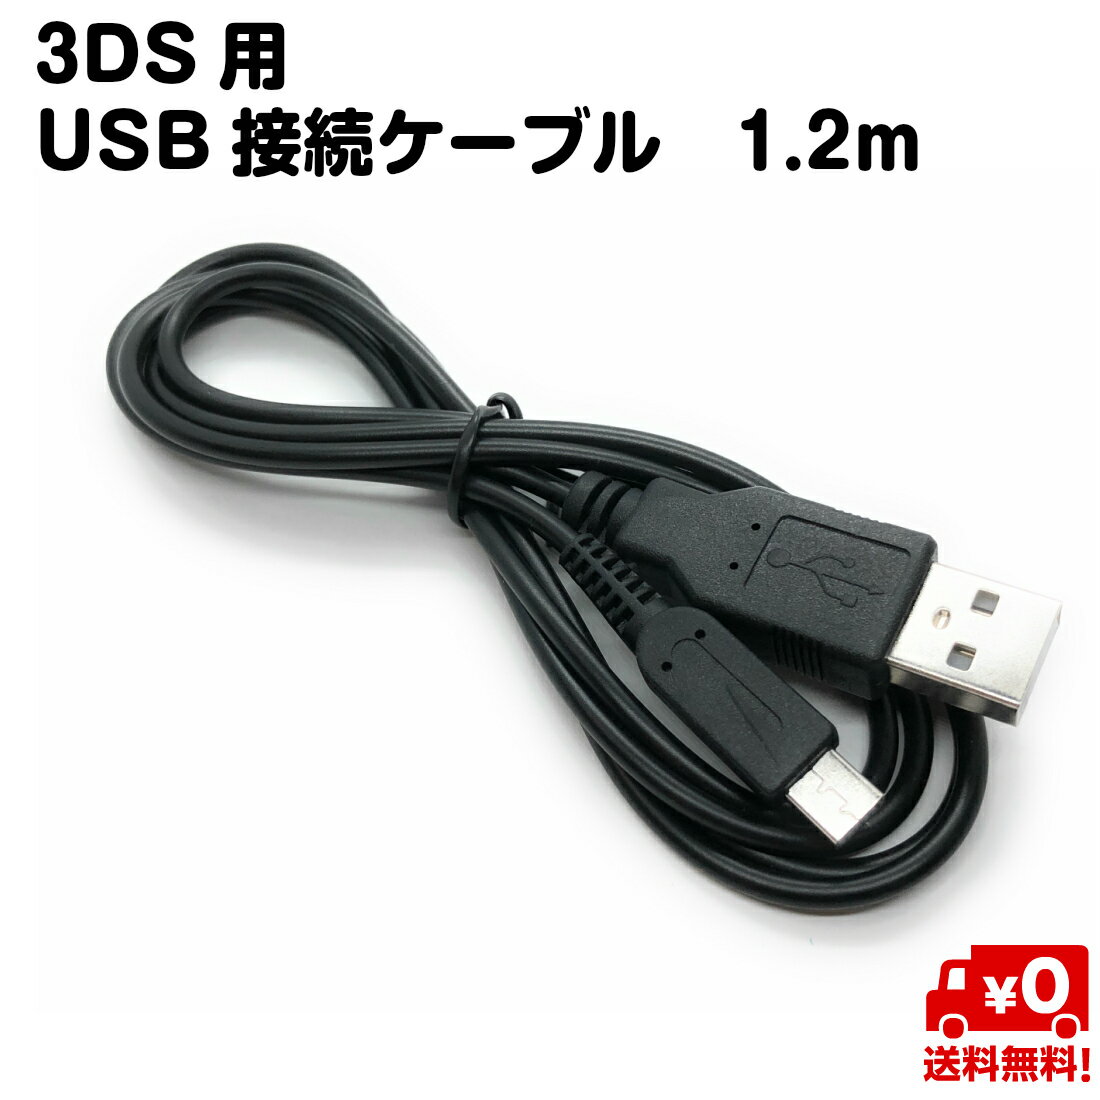 Nintendo 3DS 用 ケーブル USB 充電 接続 1.2m ブラック 送料無料